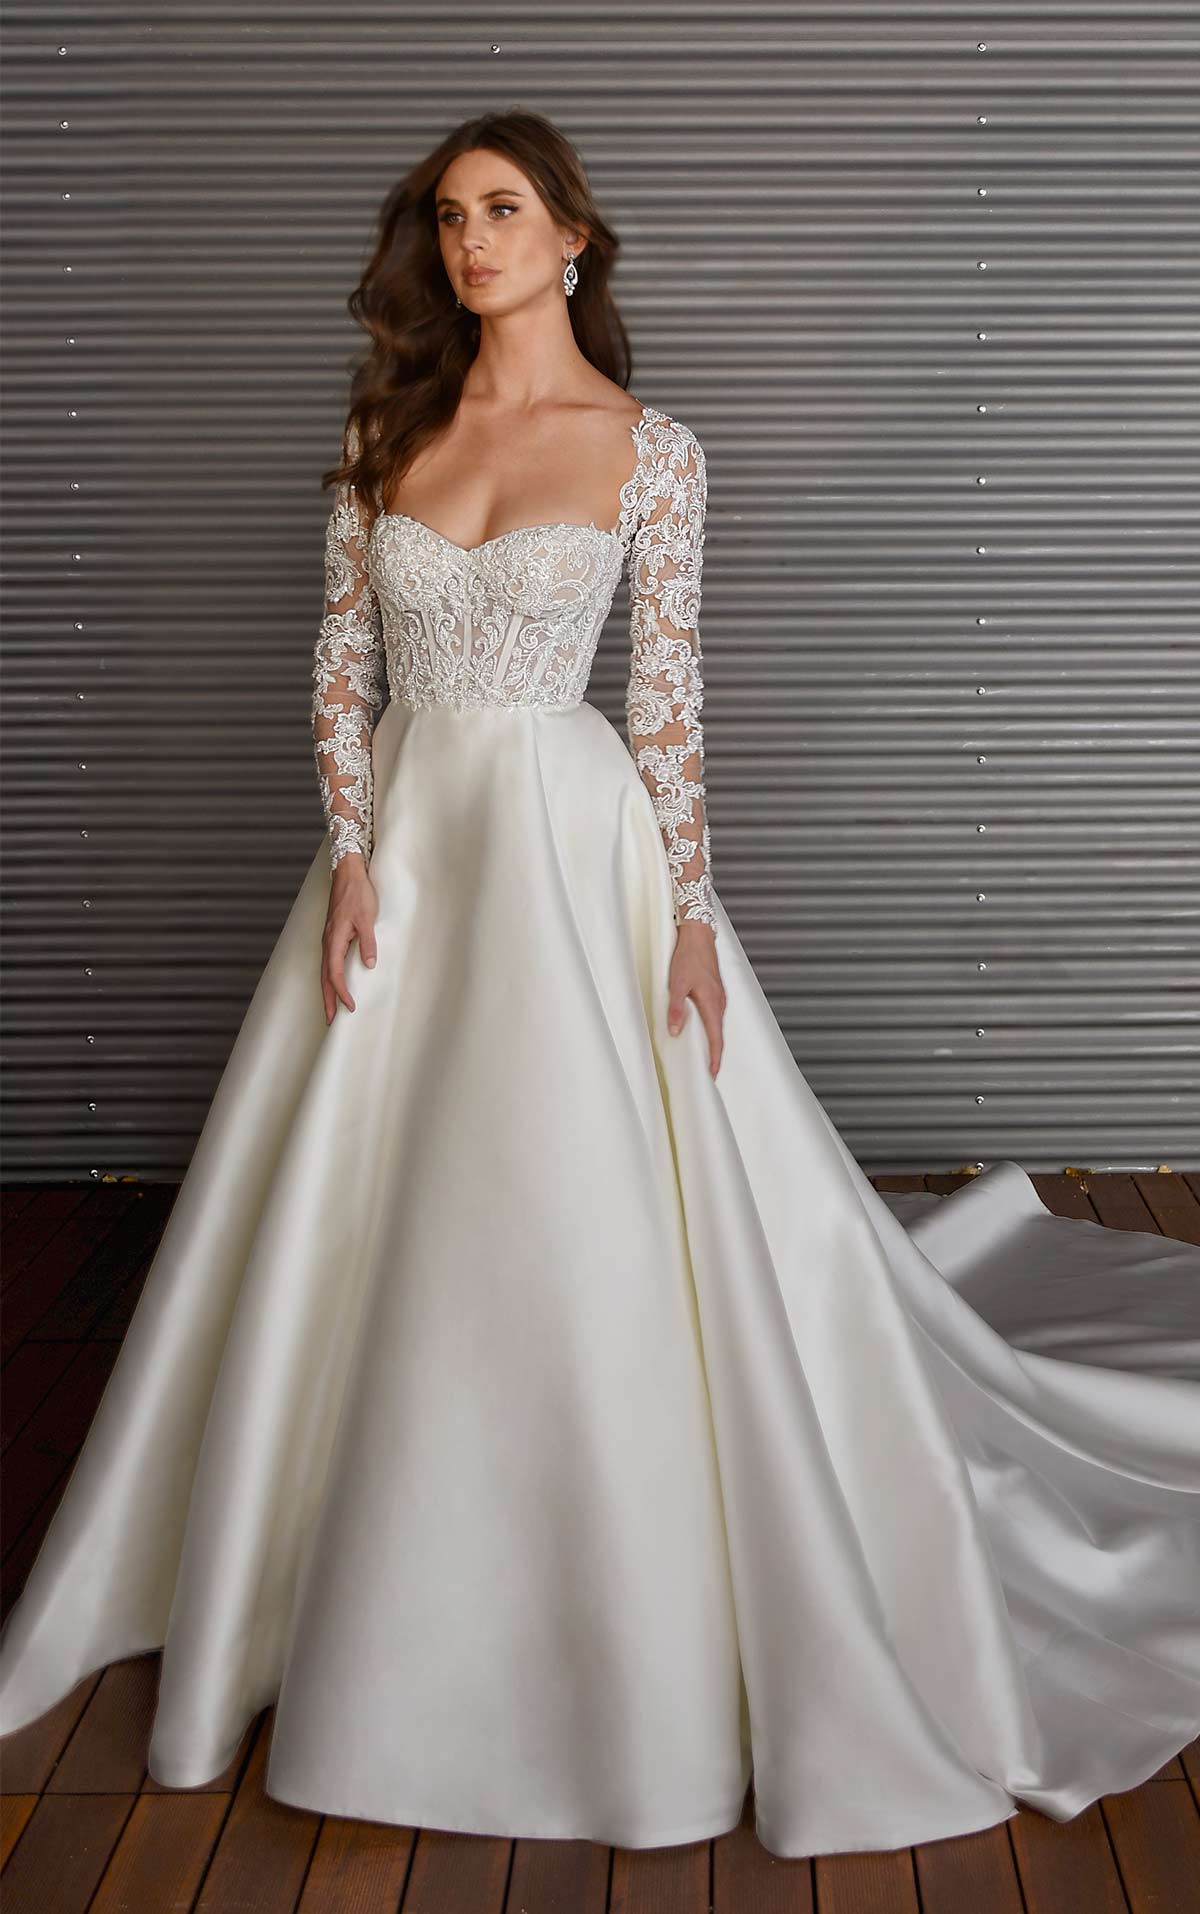 Princess Wedding Dresses: 15 Styles For FairyTale Celebration | Elegant wedding  dress ballgown, Wedding dresses princess ballgown, Fairy tale wedding dress